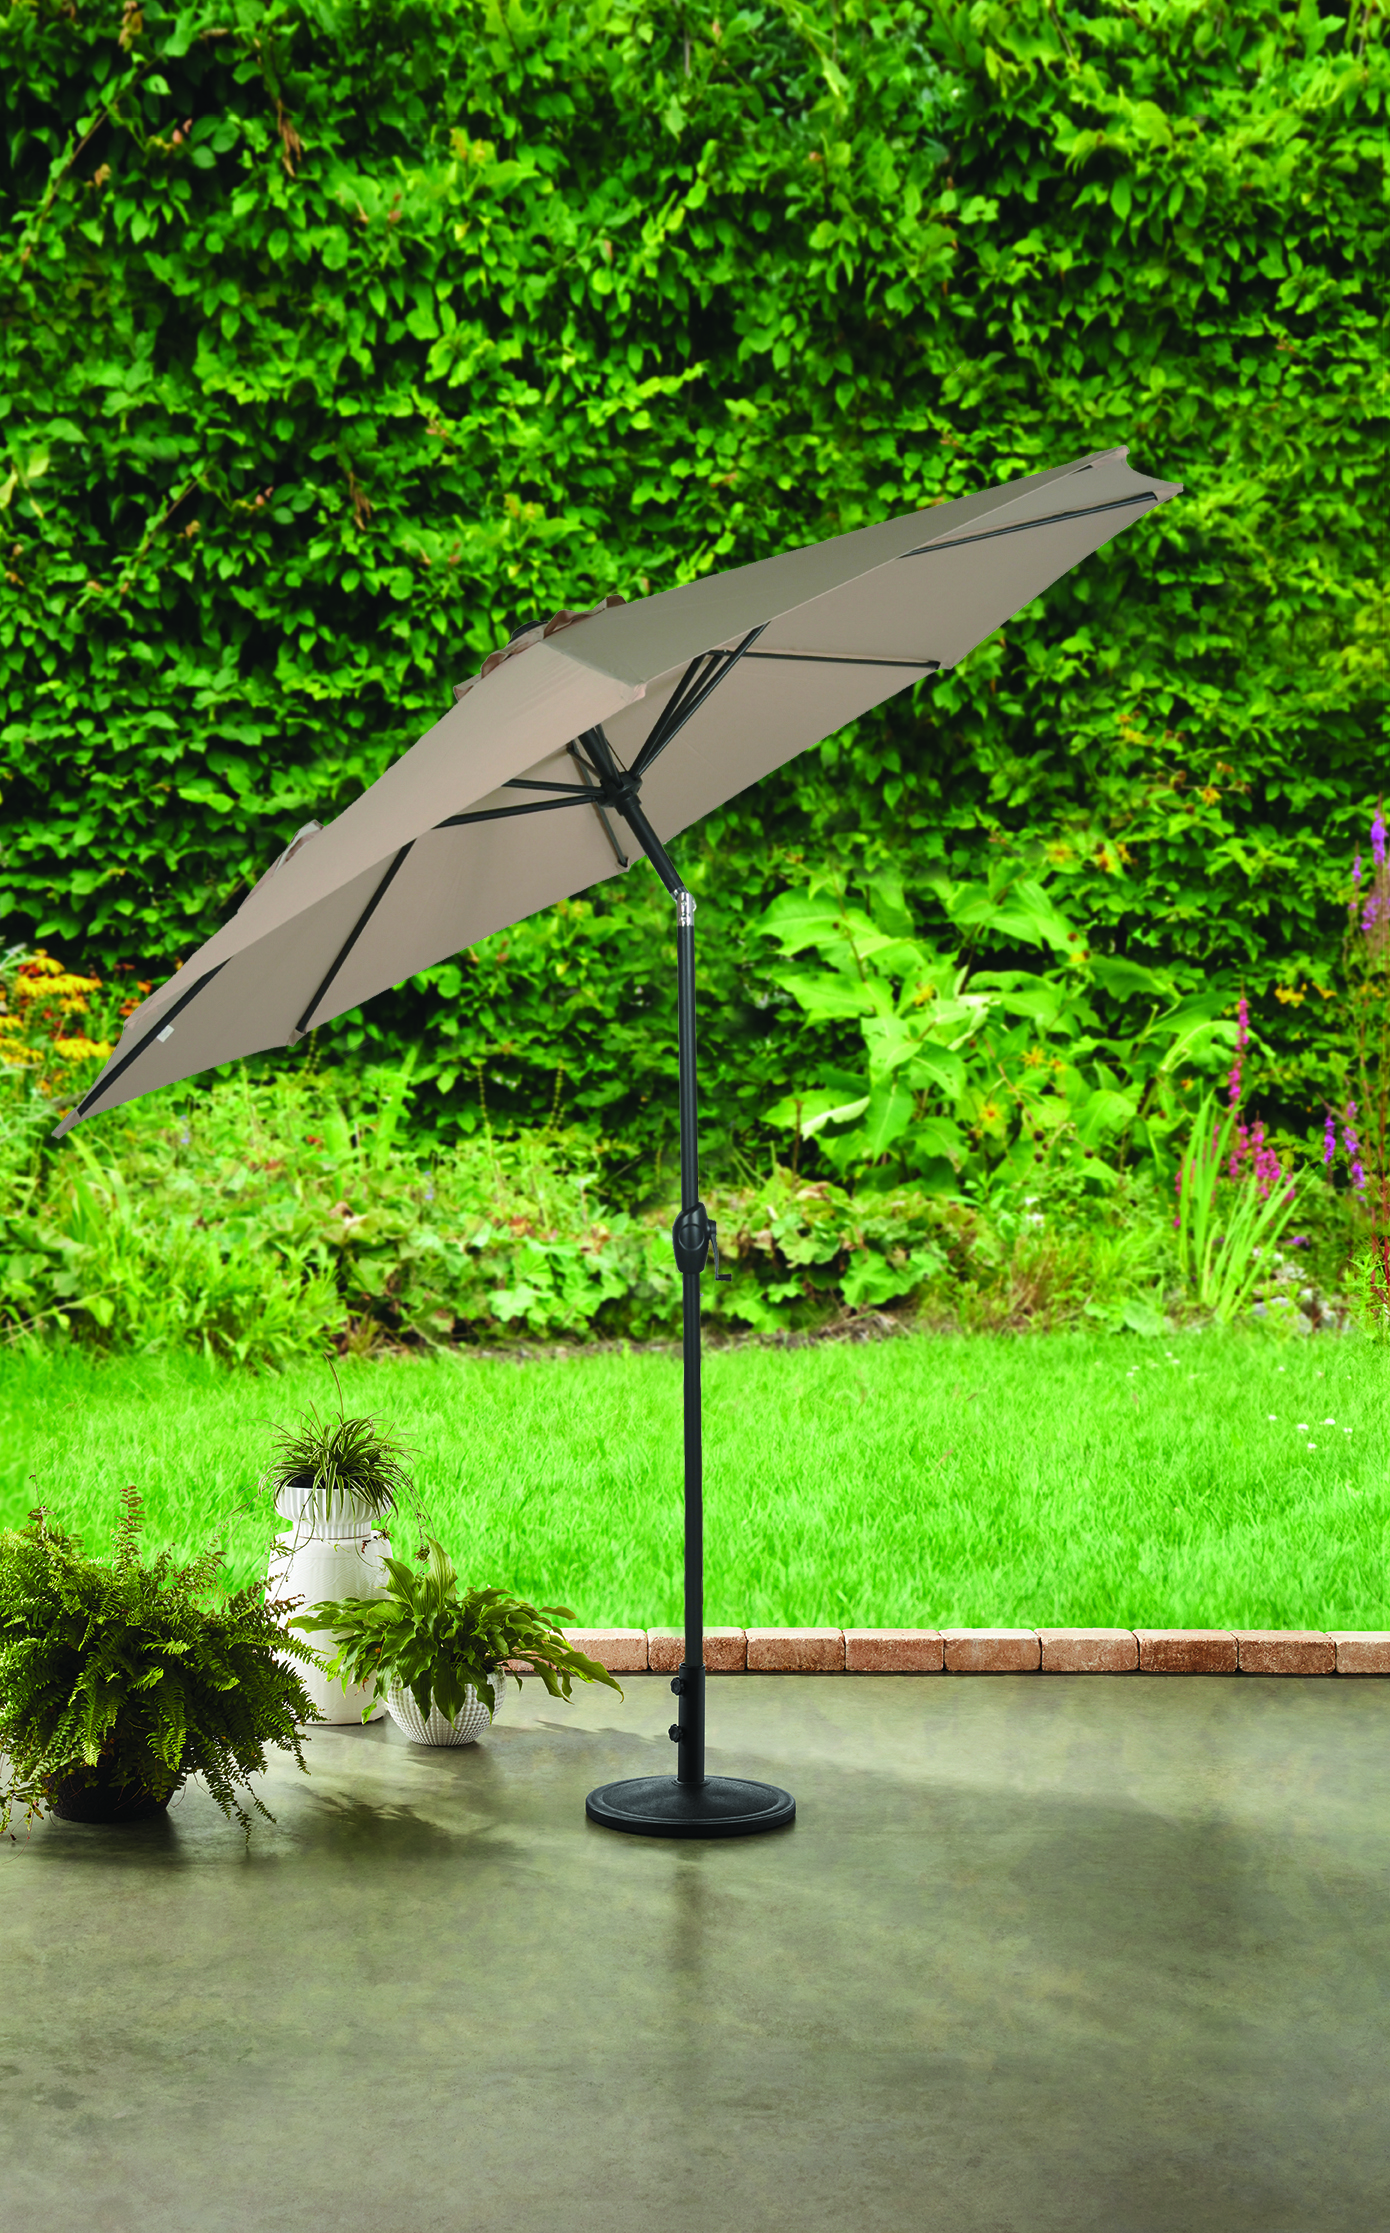 Mainstays 9' Outdoor Tilt Market Patio Umbrella - Tan - image 4 of 10